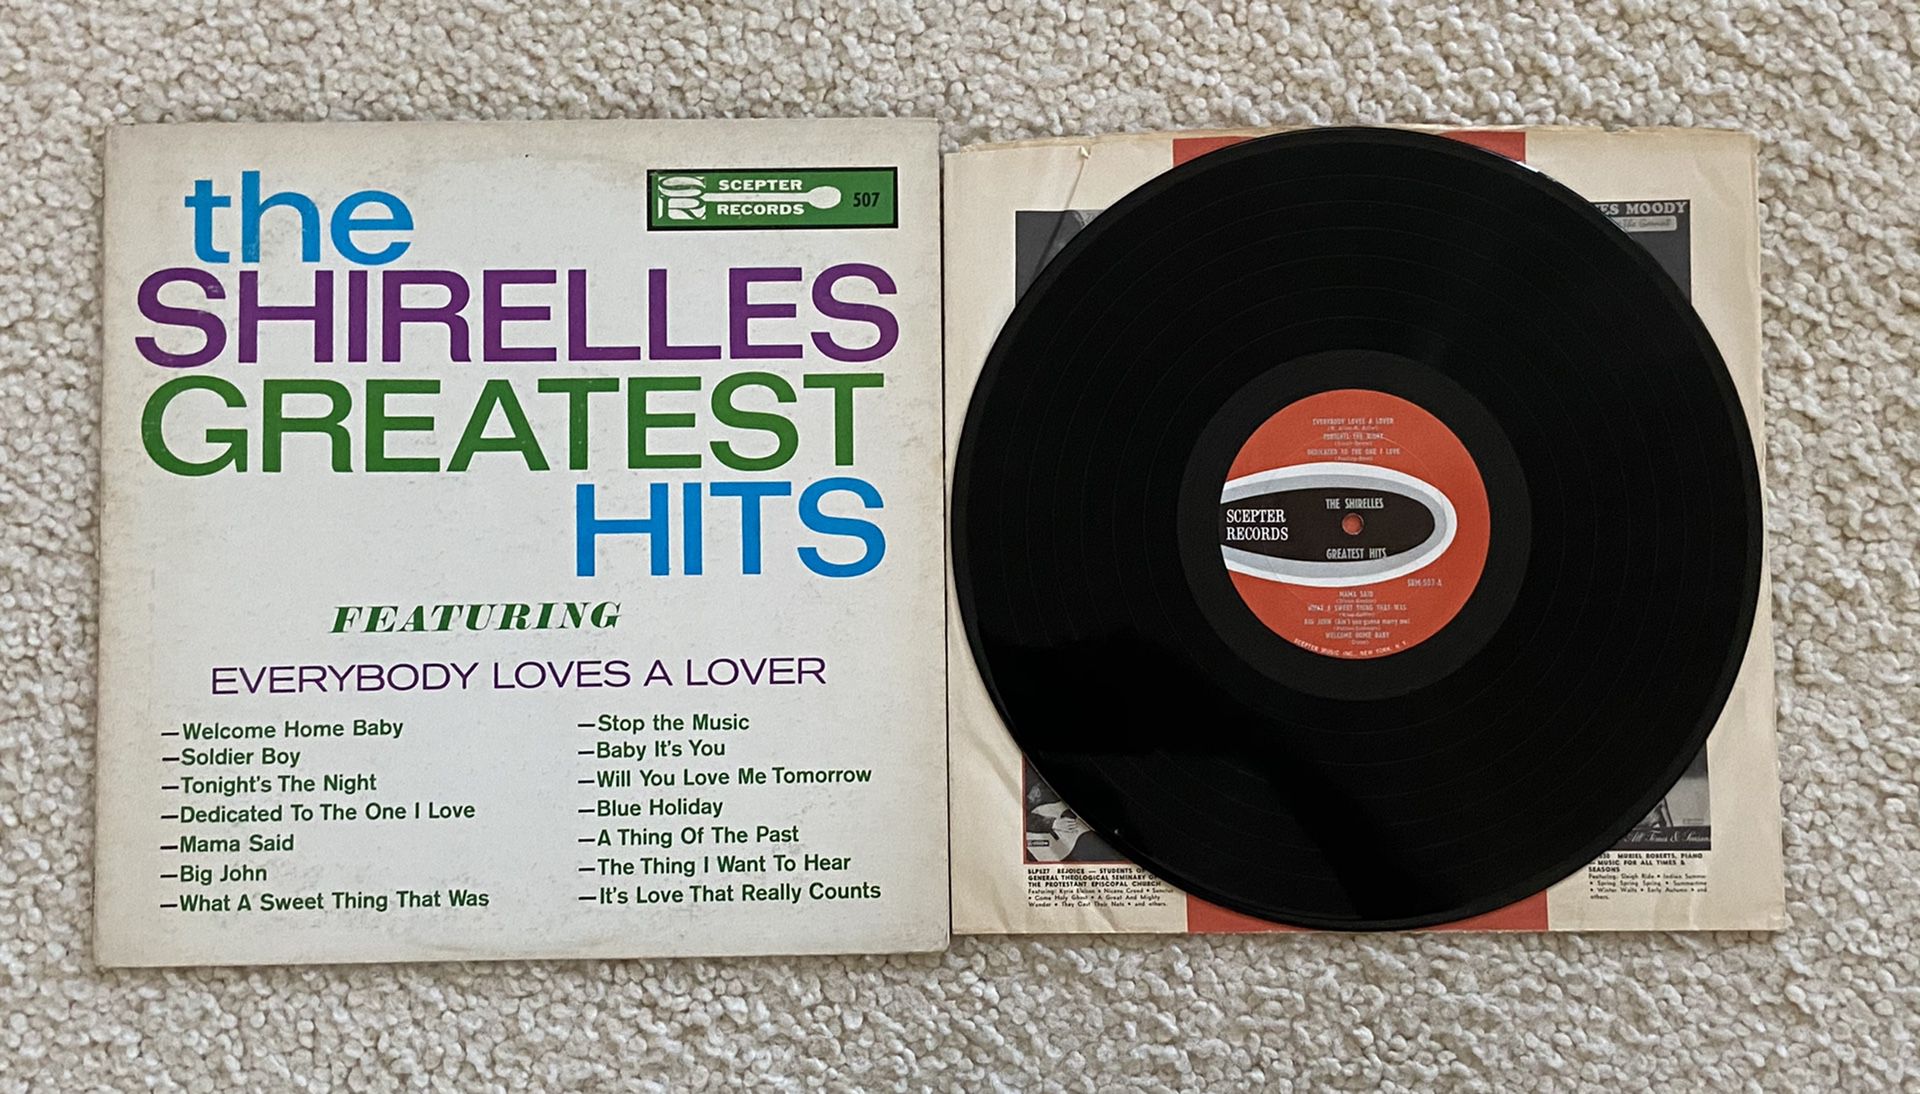 The Shirelles “The Shirelles Greatest Hits” vinyl lp hit compilation 1960s Scepter Records Original beautiful glossy vinyl 60s R&B